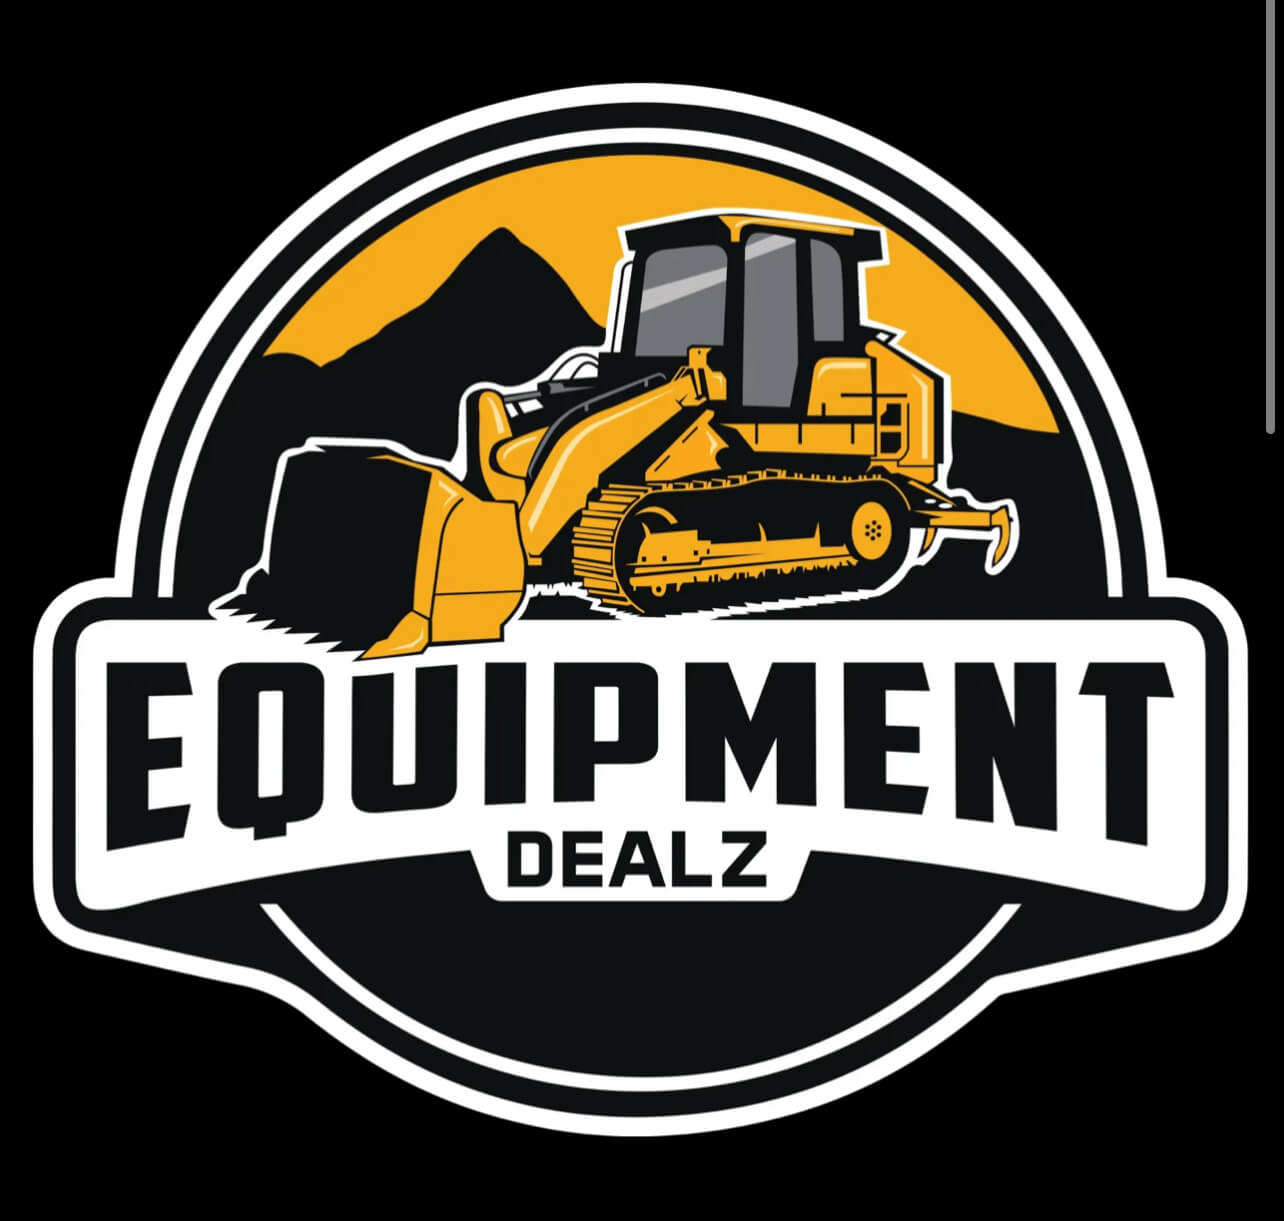 EquipmentDealz, LLC